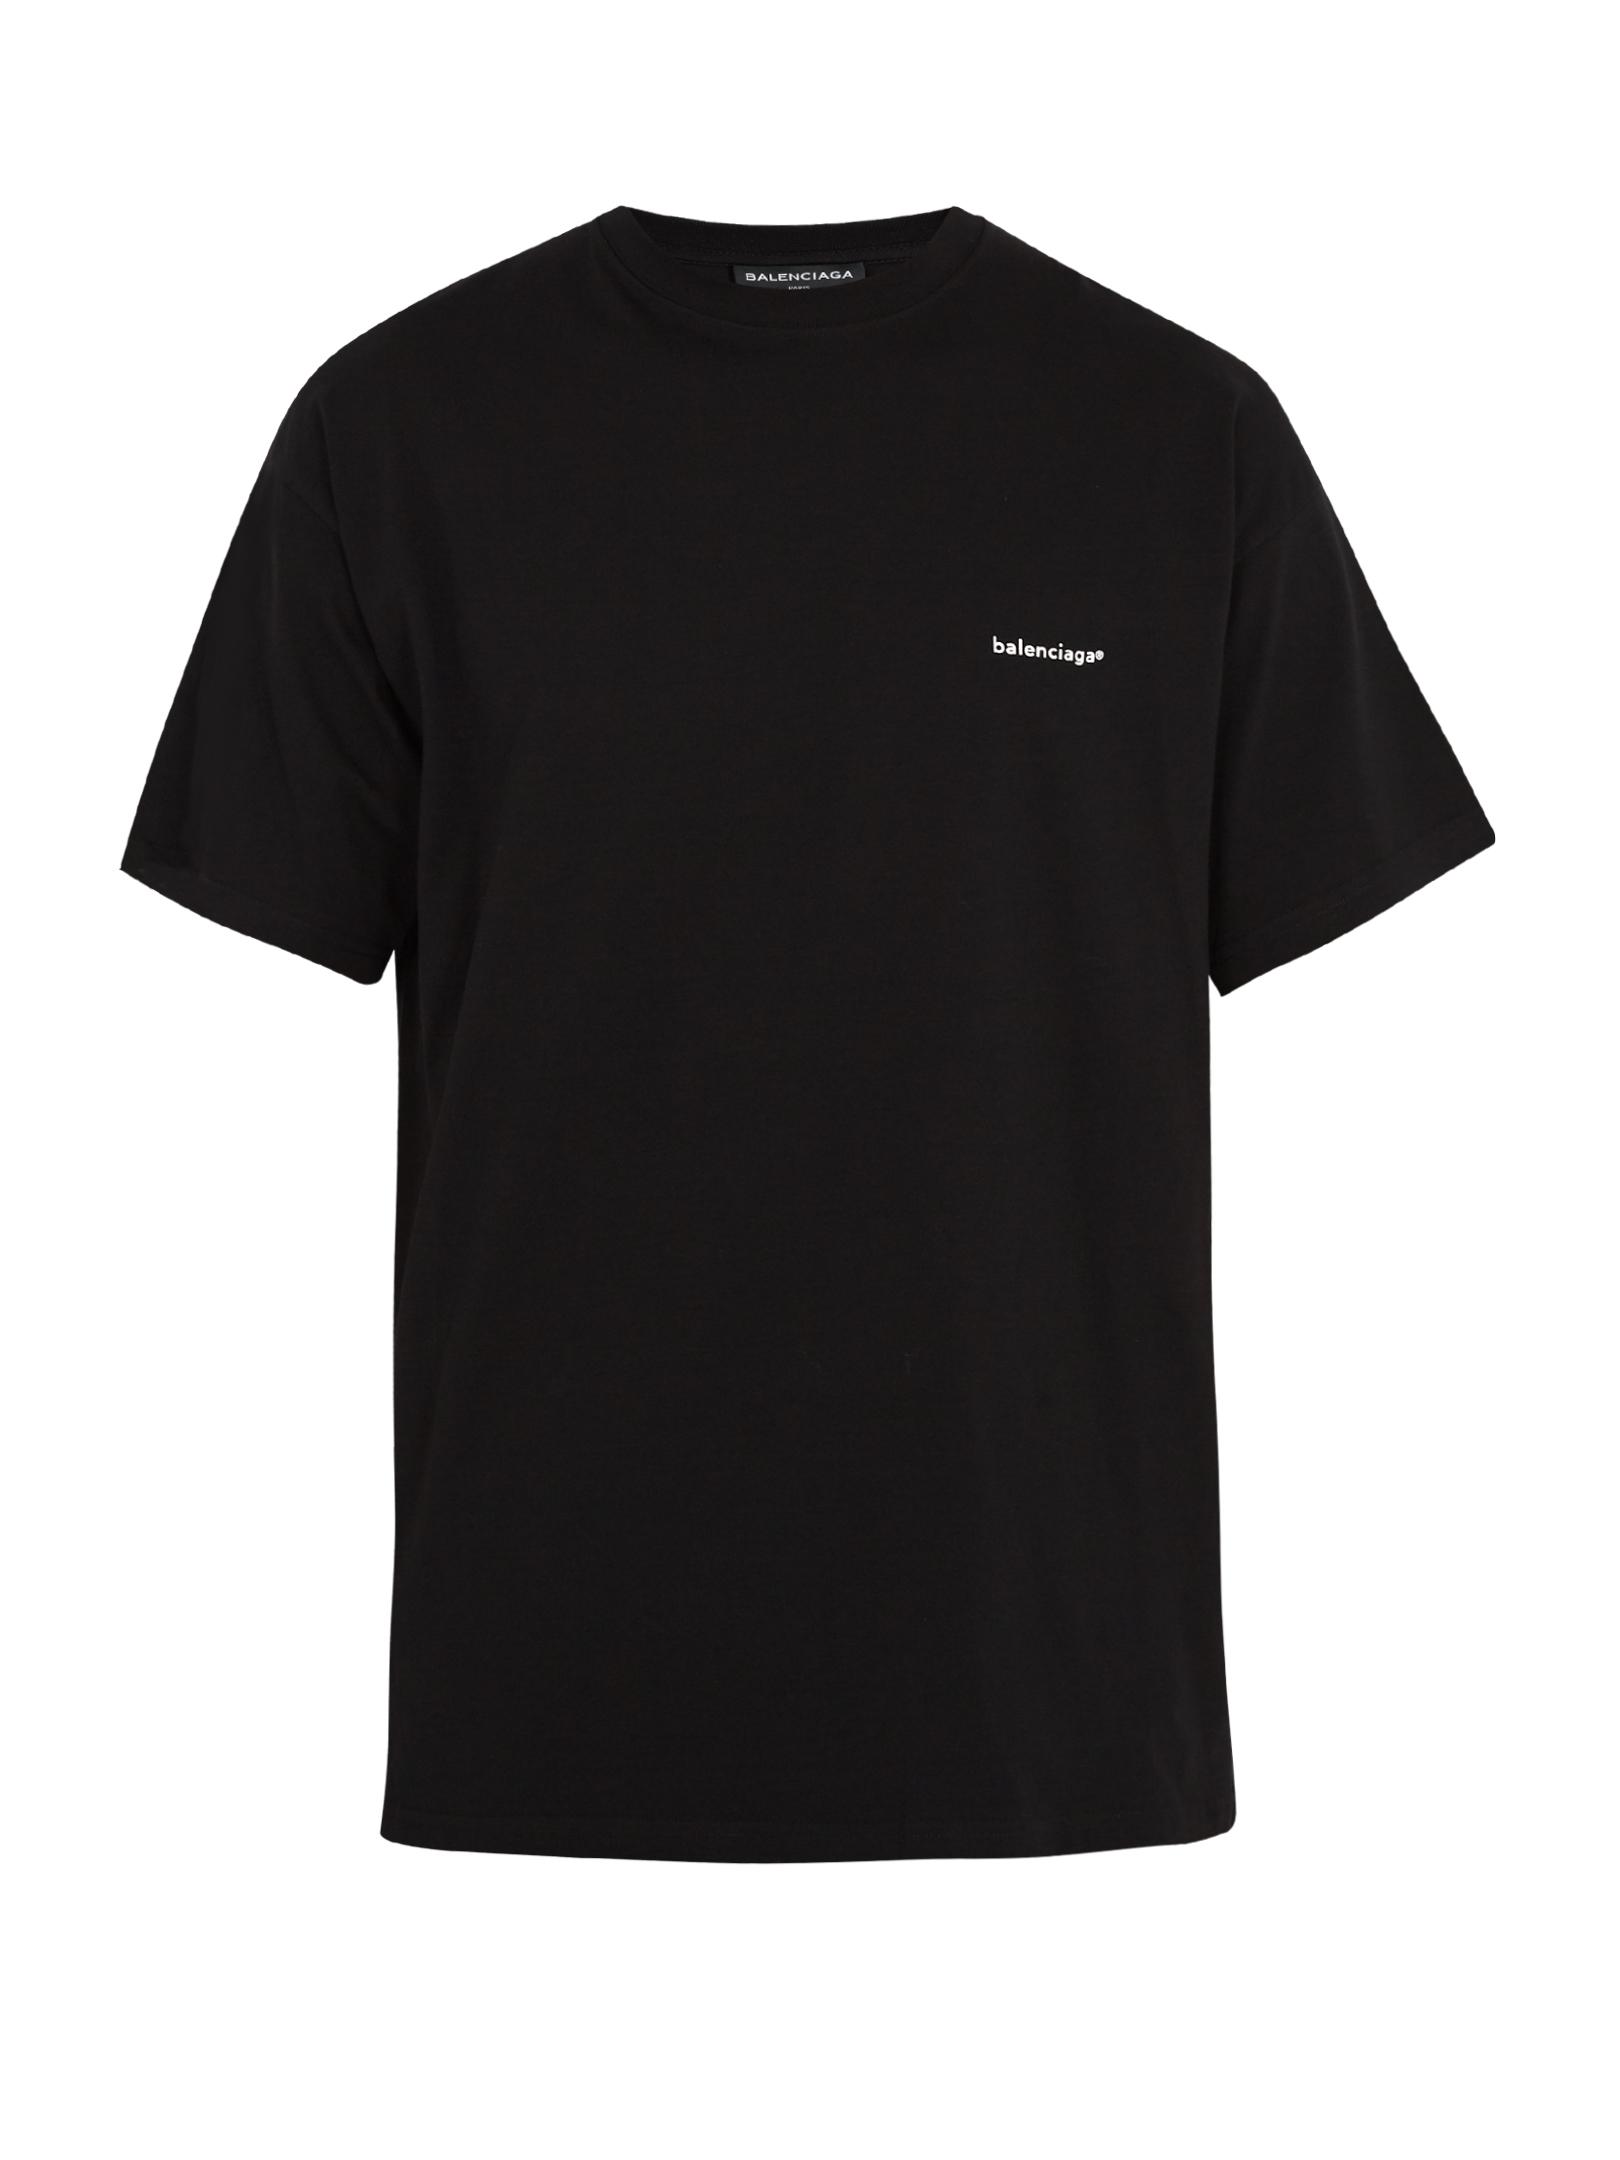 Lyst - Balenciaga Oversized Logo-print Cotton T-shirt in Black for Men